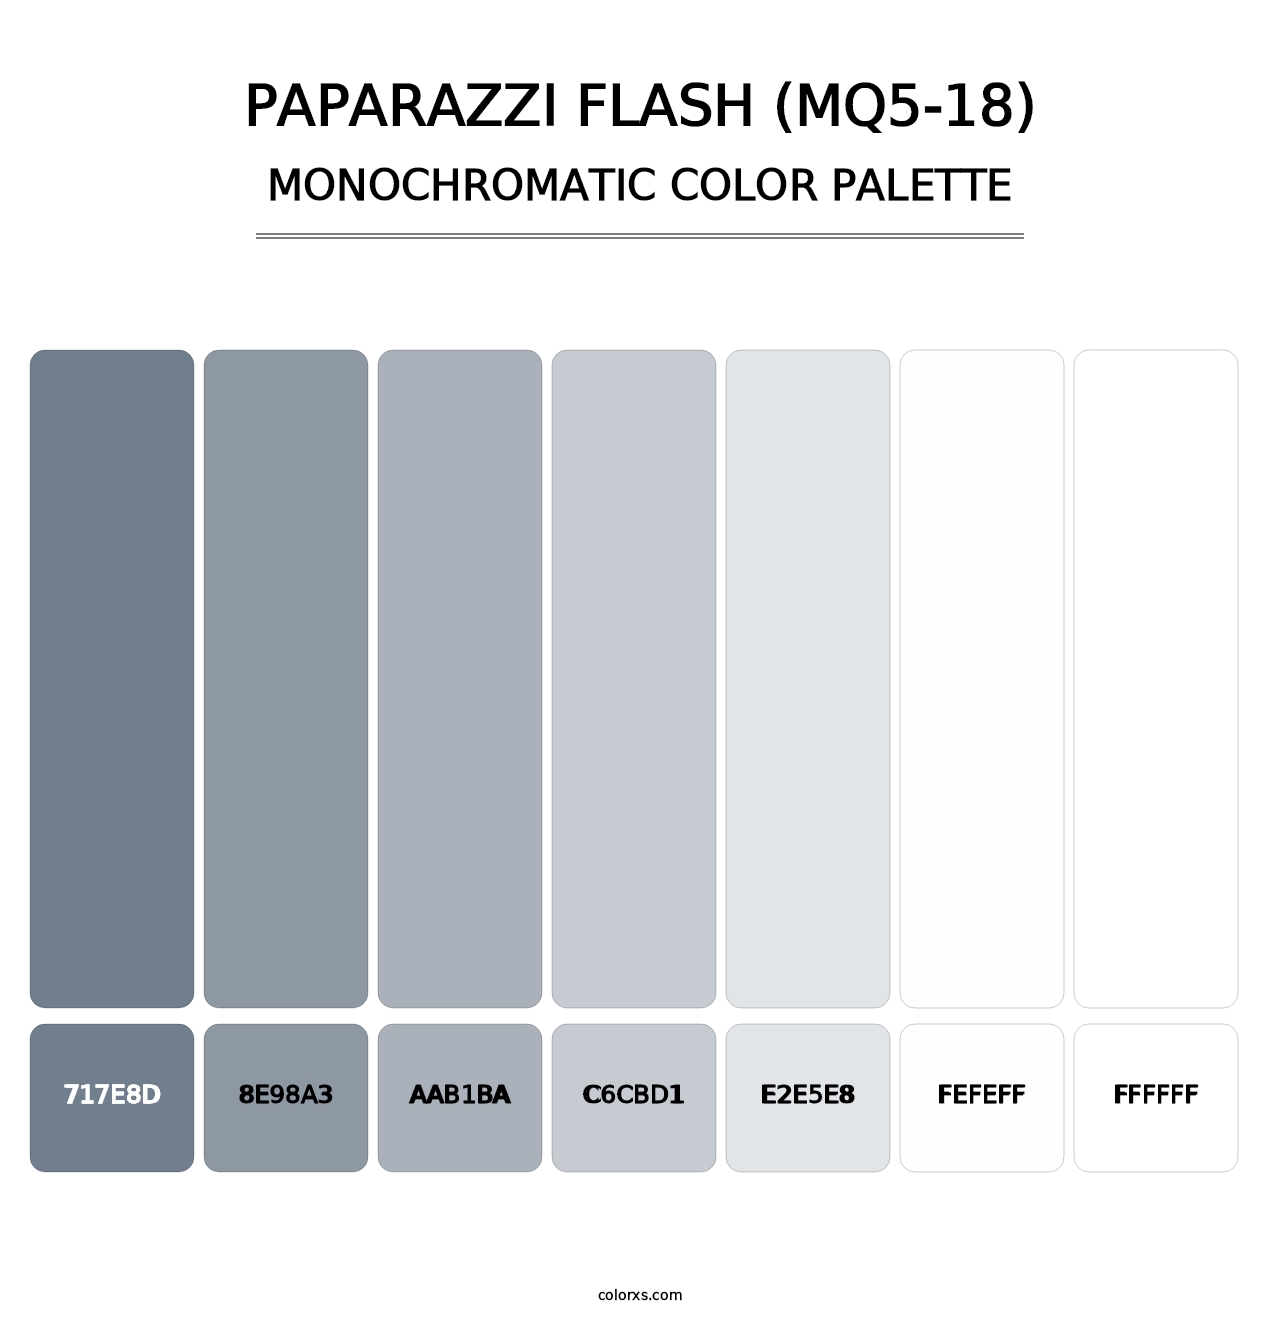 Paparazzi Flash (MQ5-18) - Monochromatic Color Palette